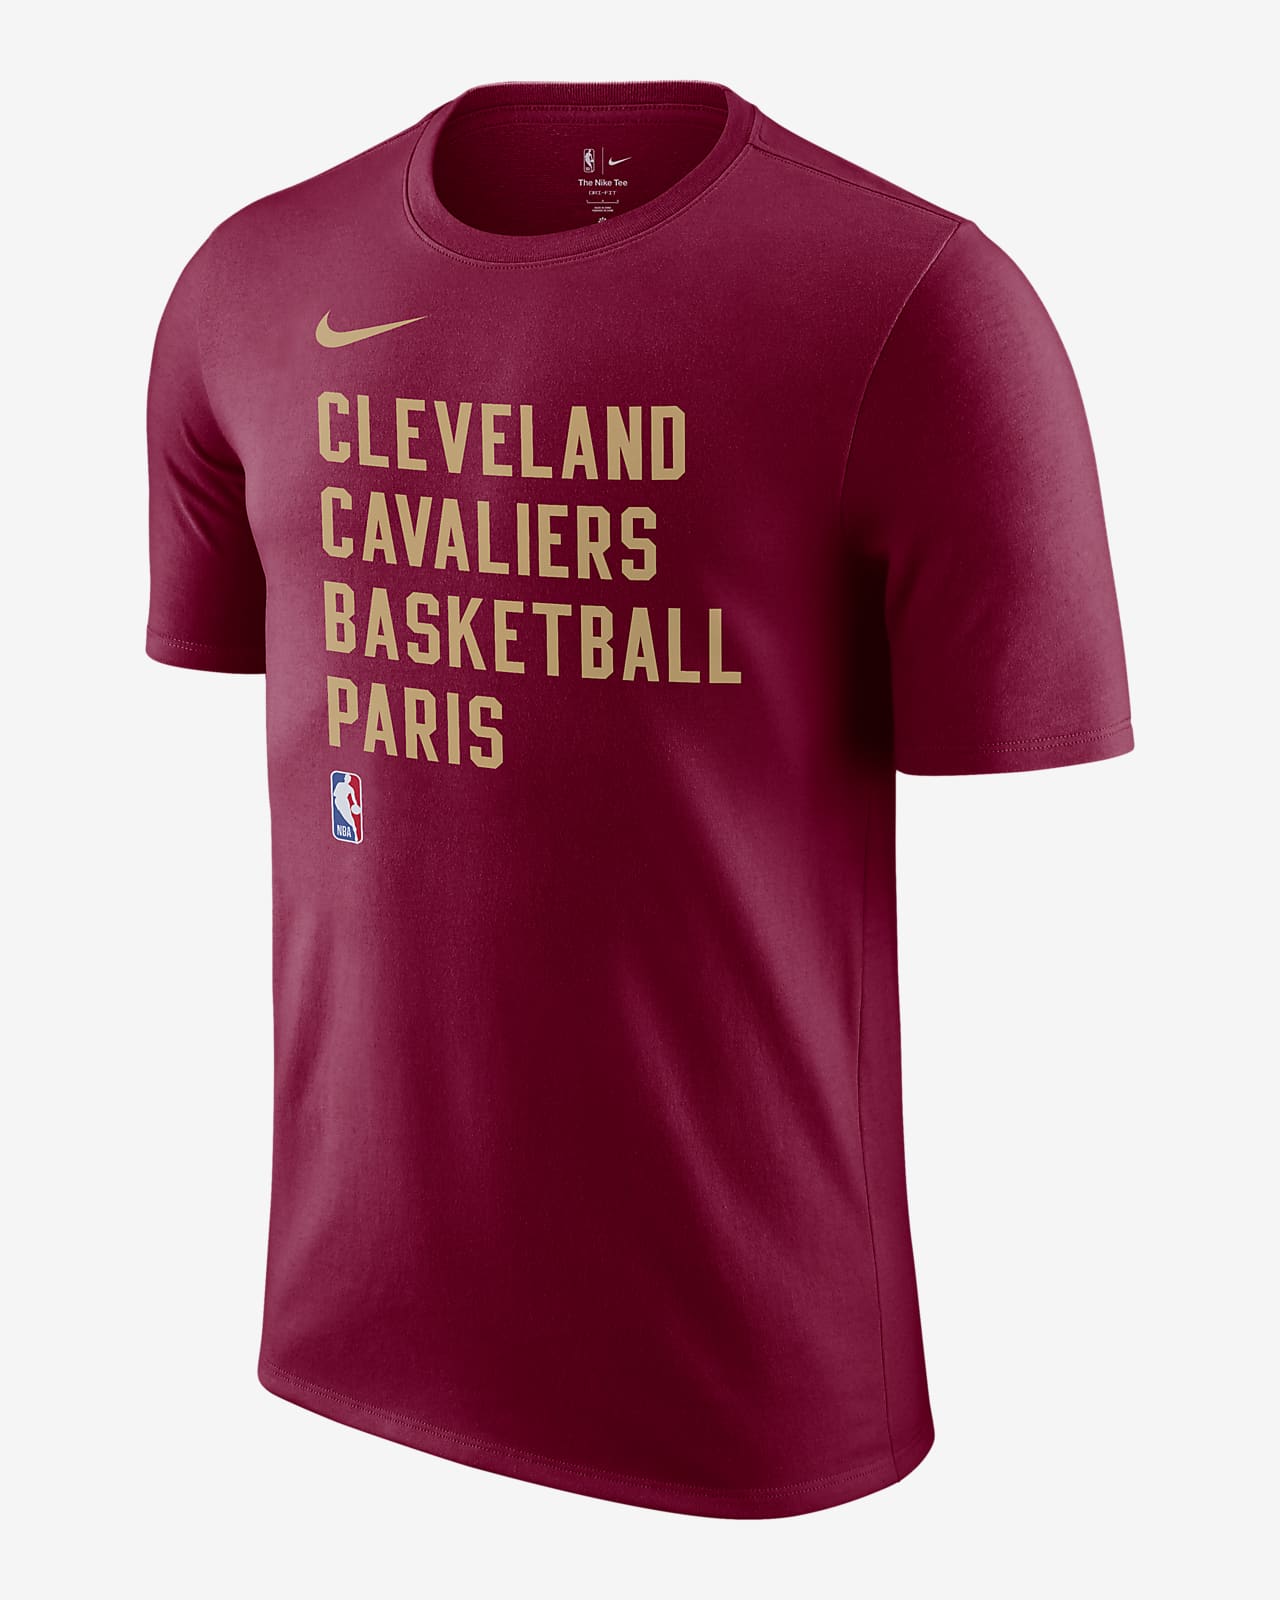 Cleveland Cavaliers Essential Camiseta Nike Dri-FIT de la NBA - Hombre